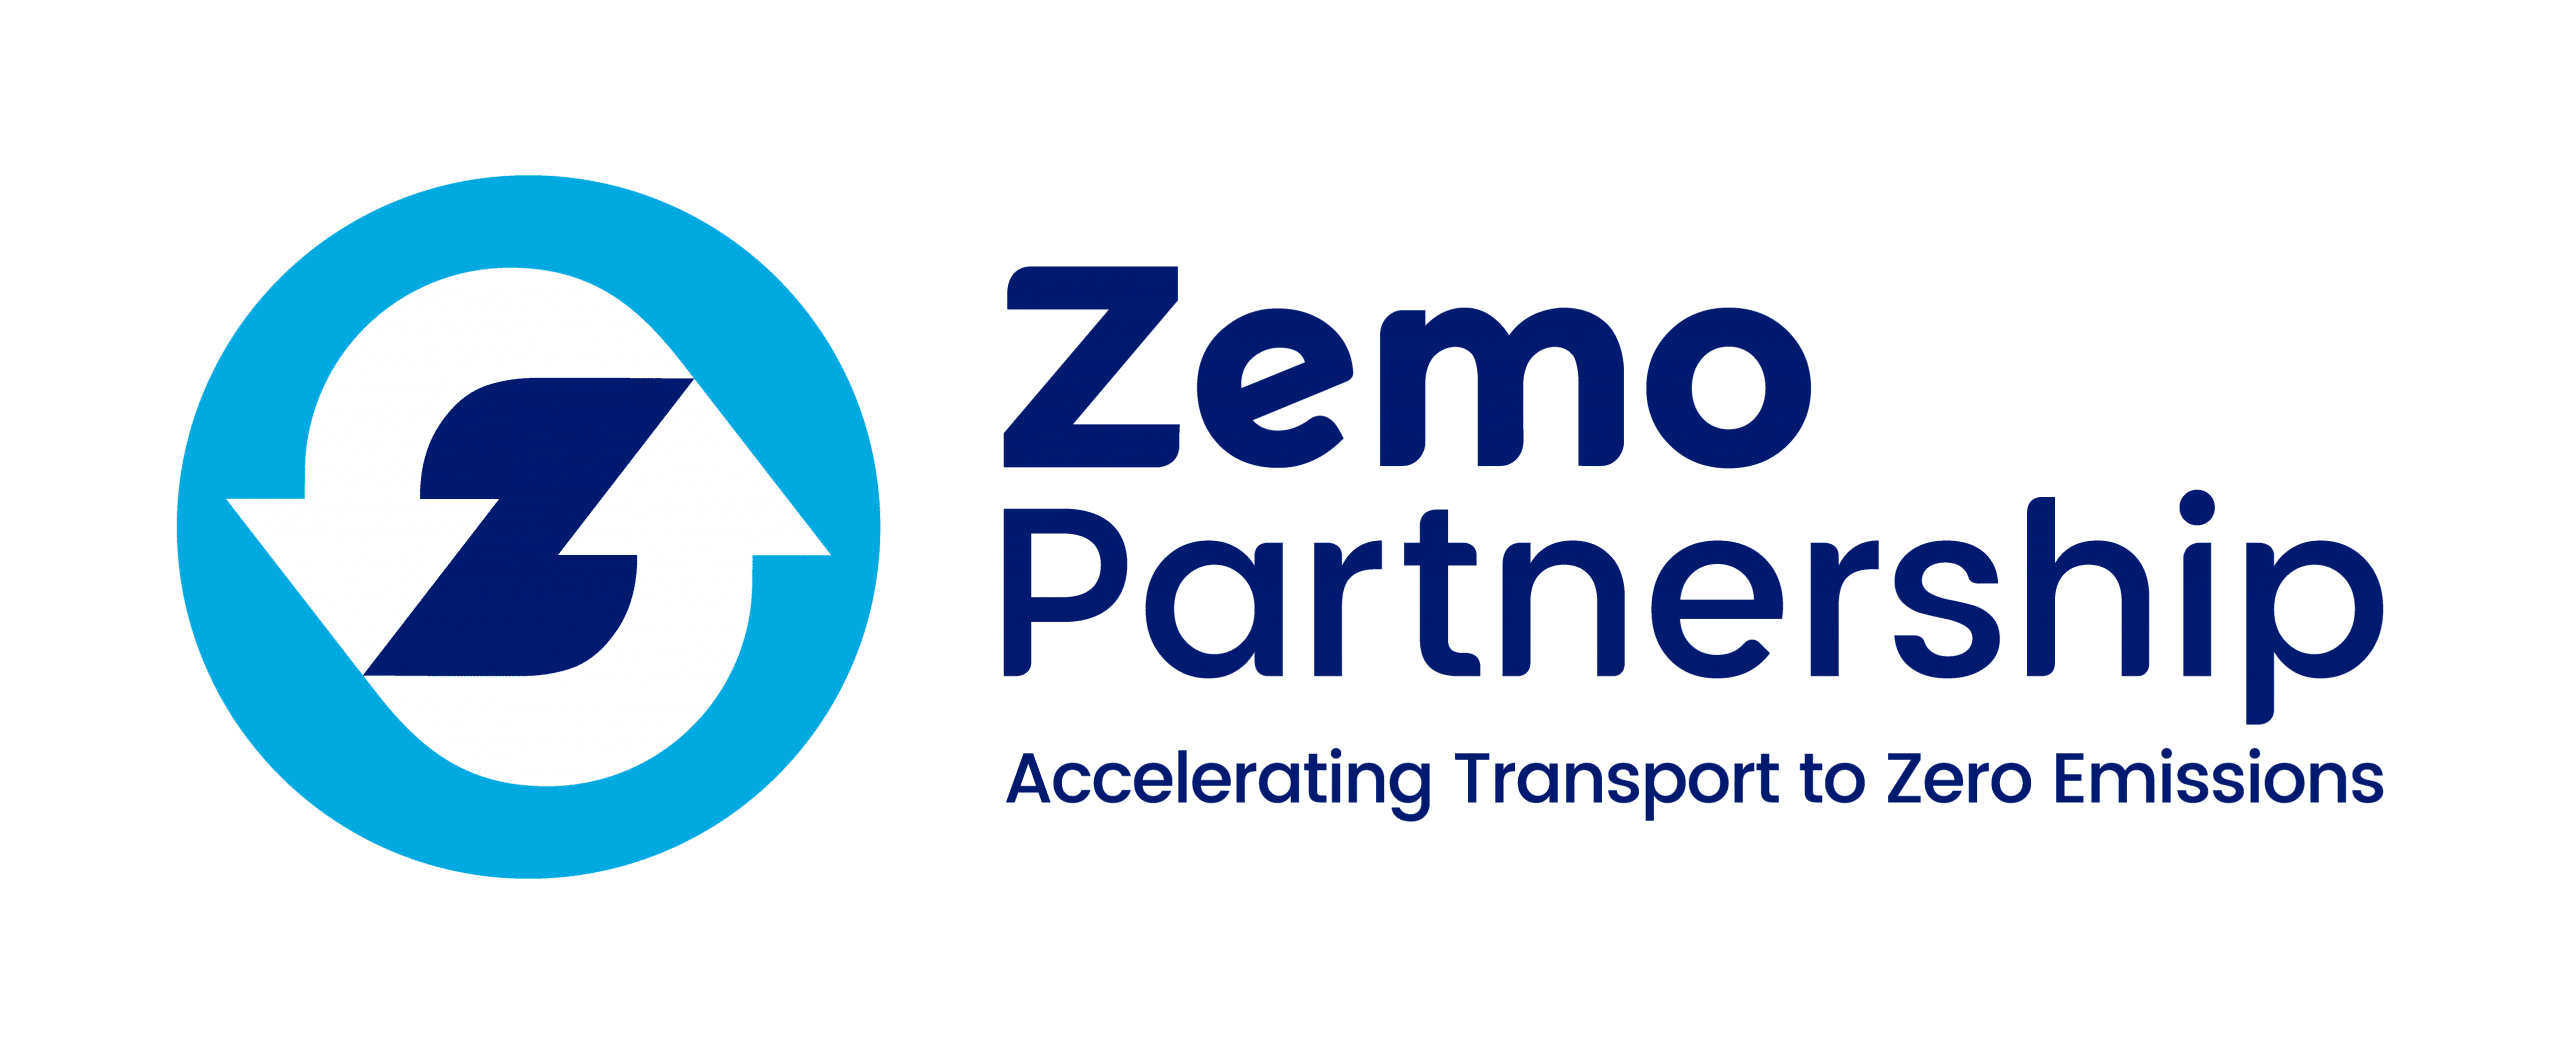 Zemo Partnership Logo